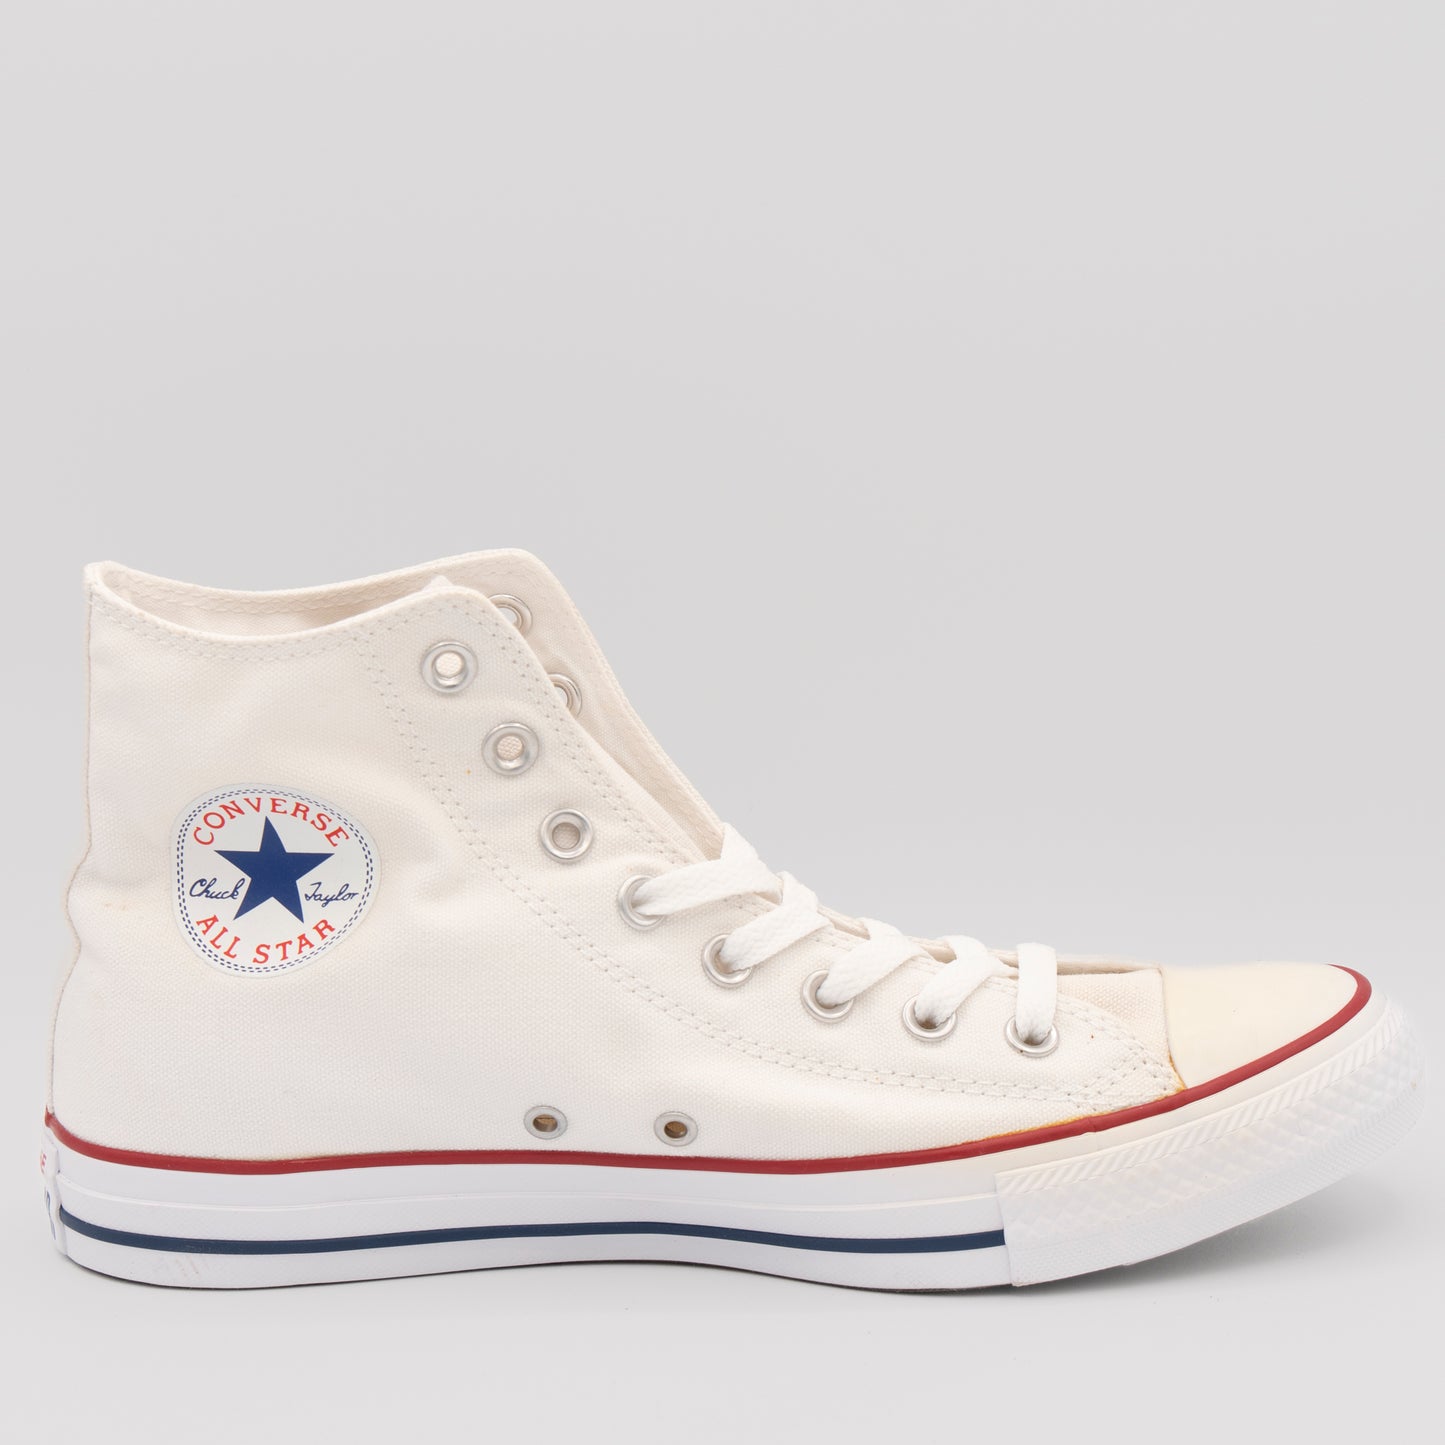 Converse - All Star Hi Top - Optical White